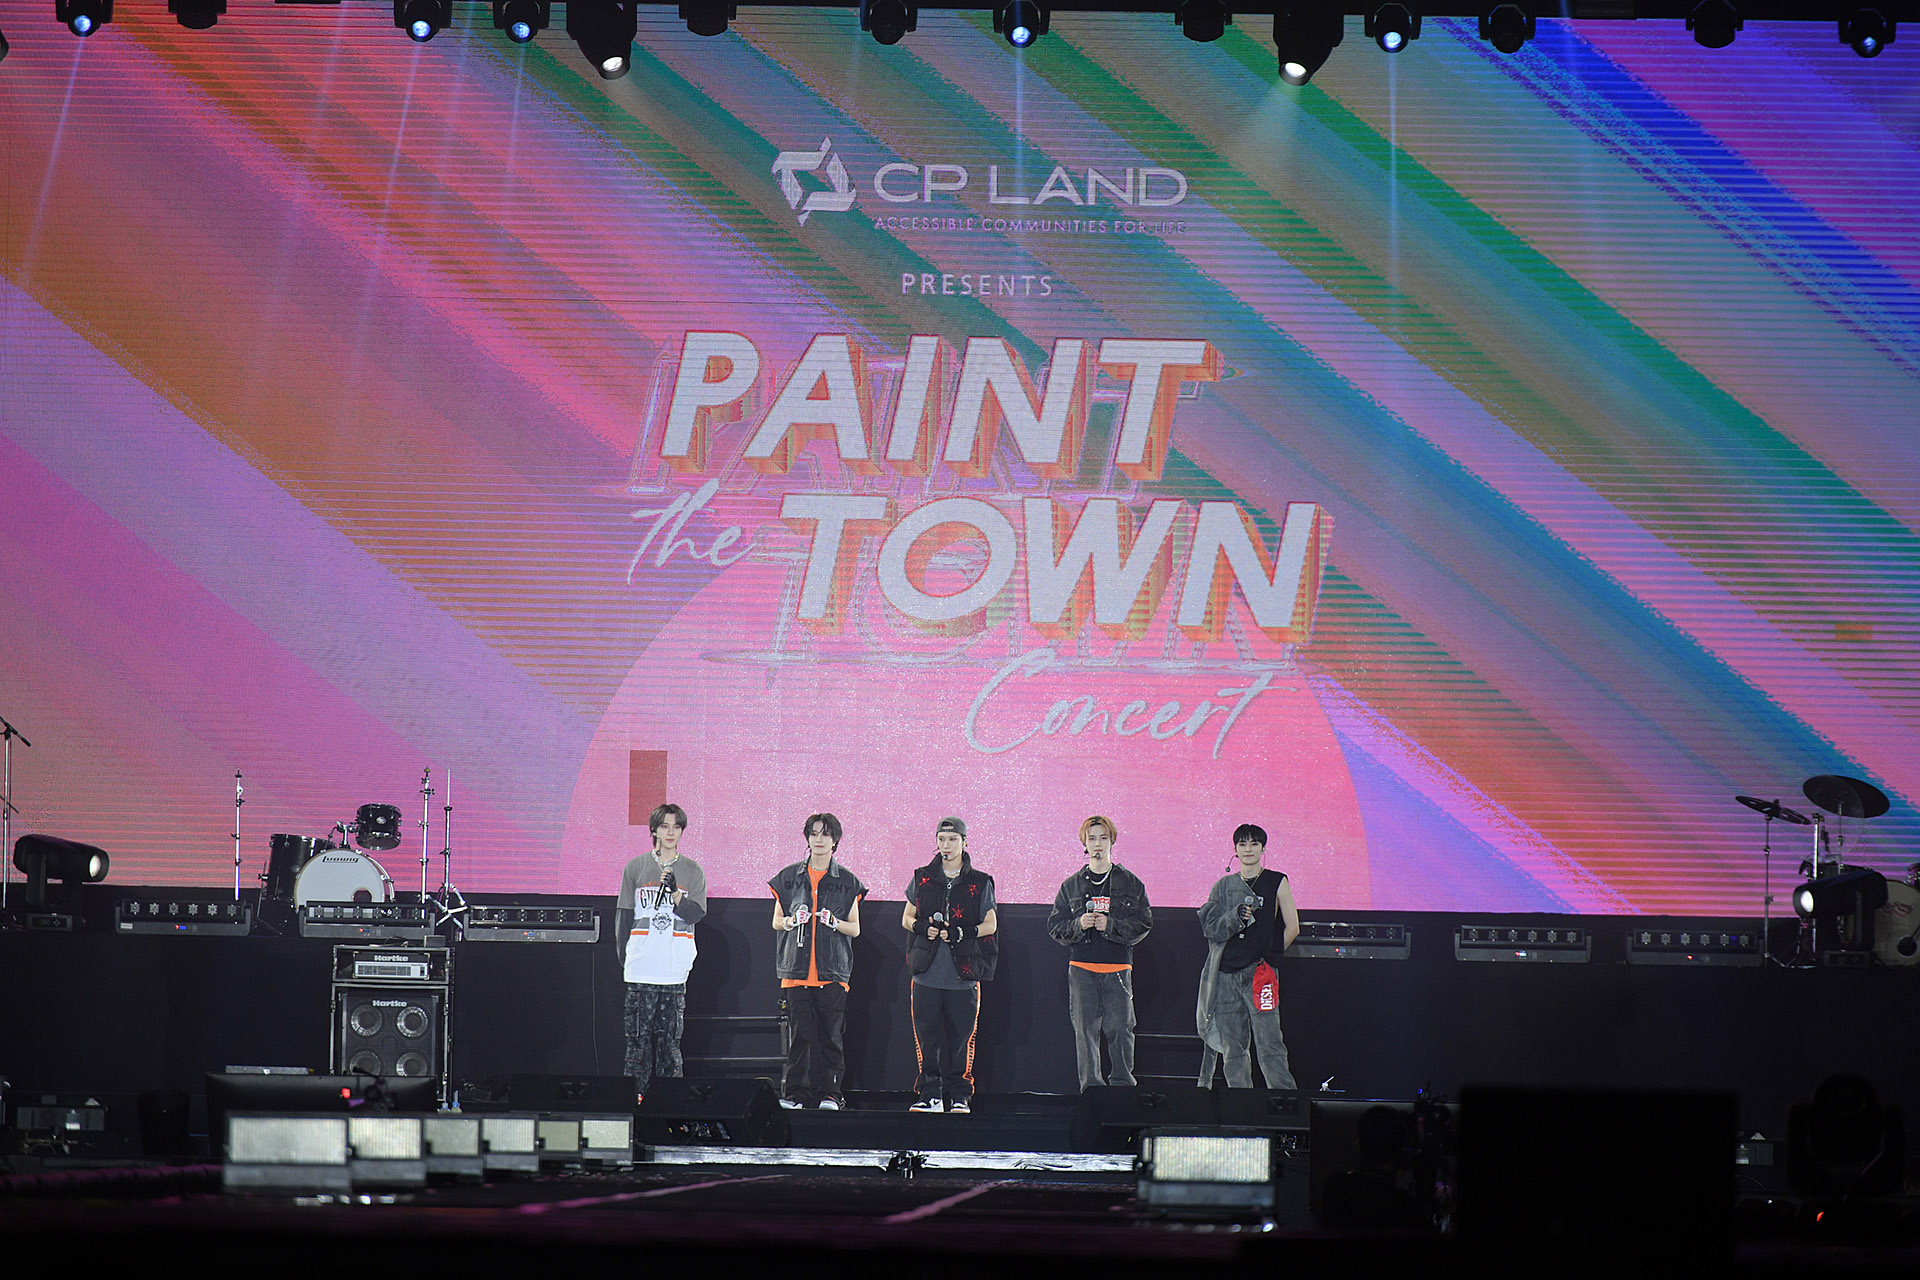 WayV C.P Land presents Paint the Town Concert